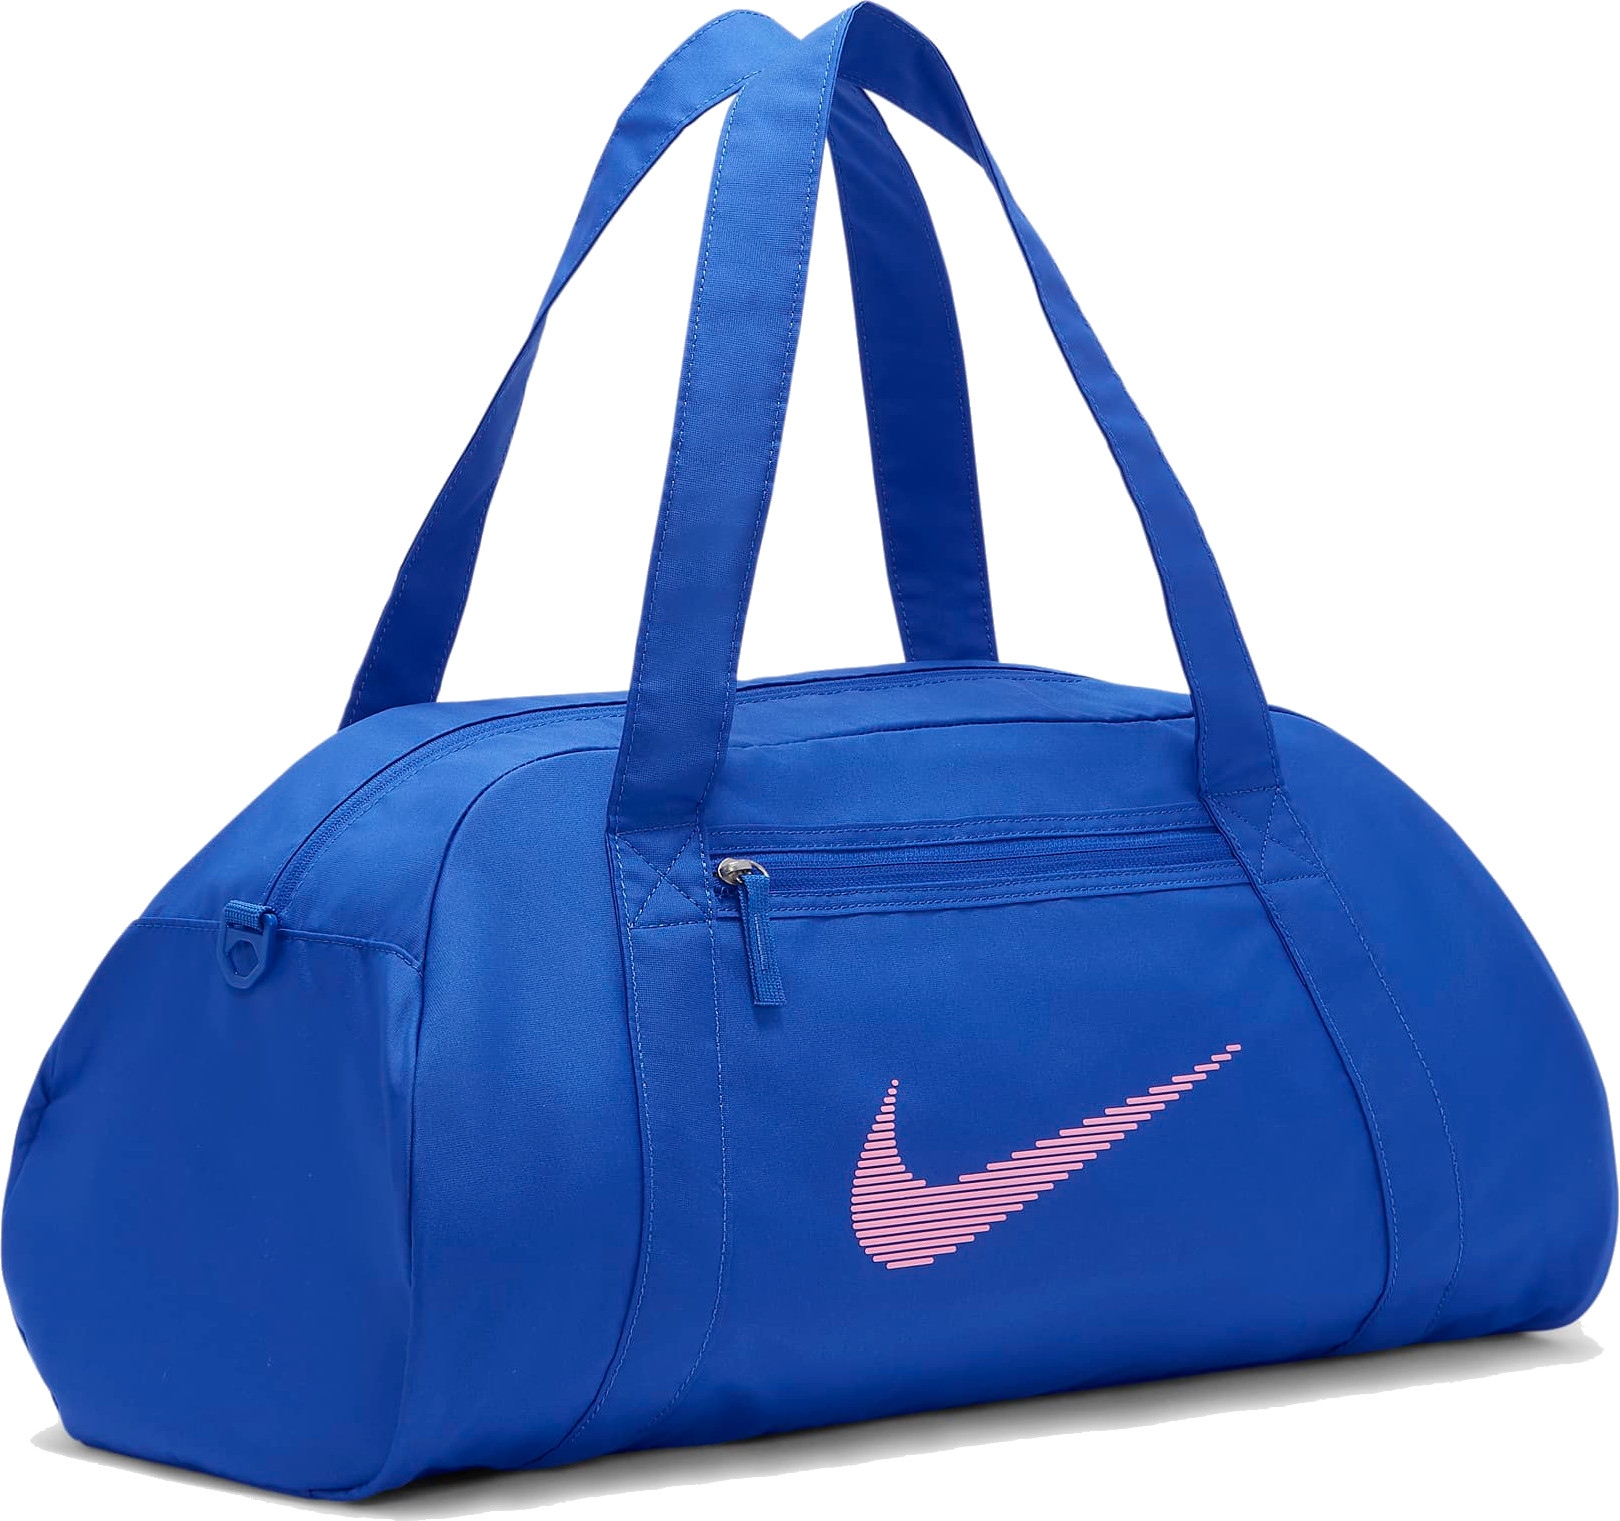 Inevitable Popular cuenco Nike Gym Club Bag